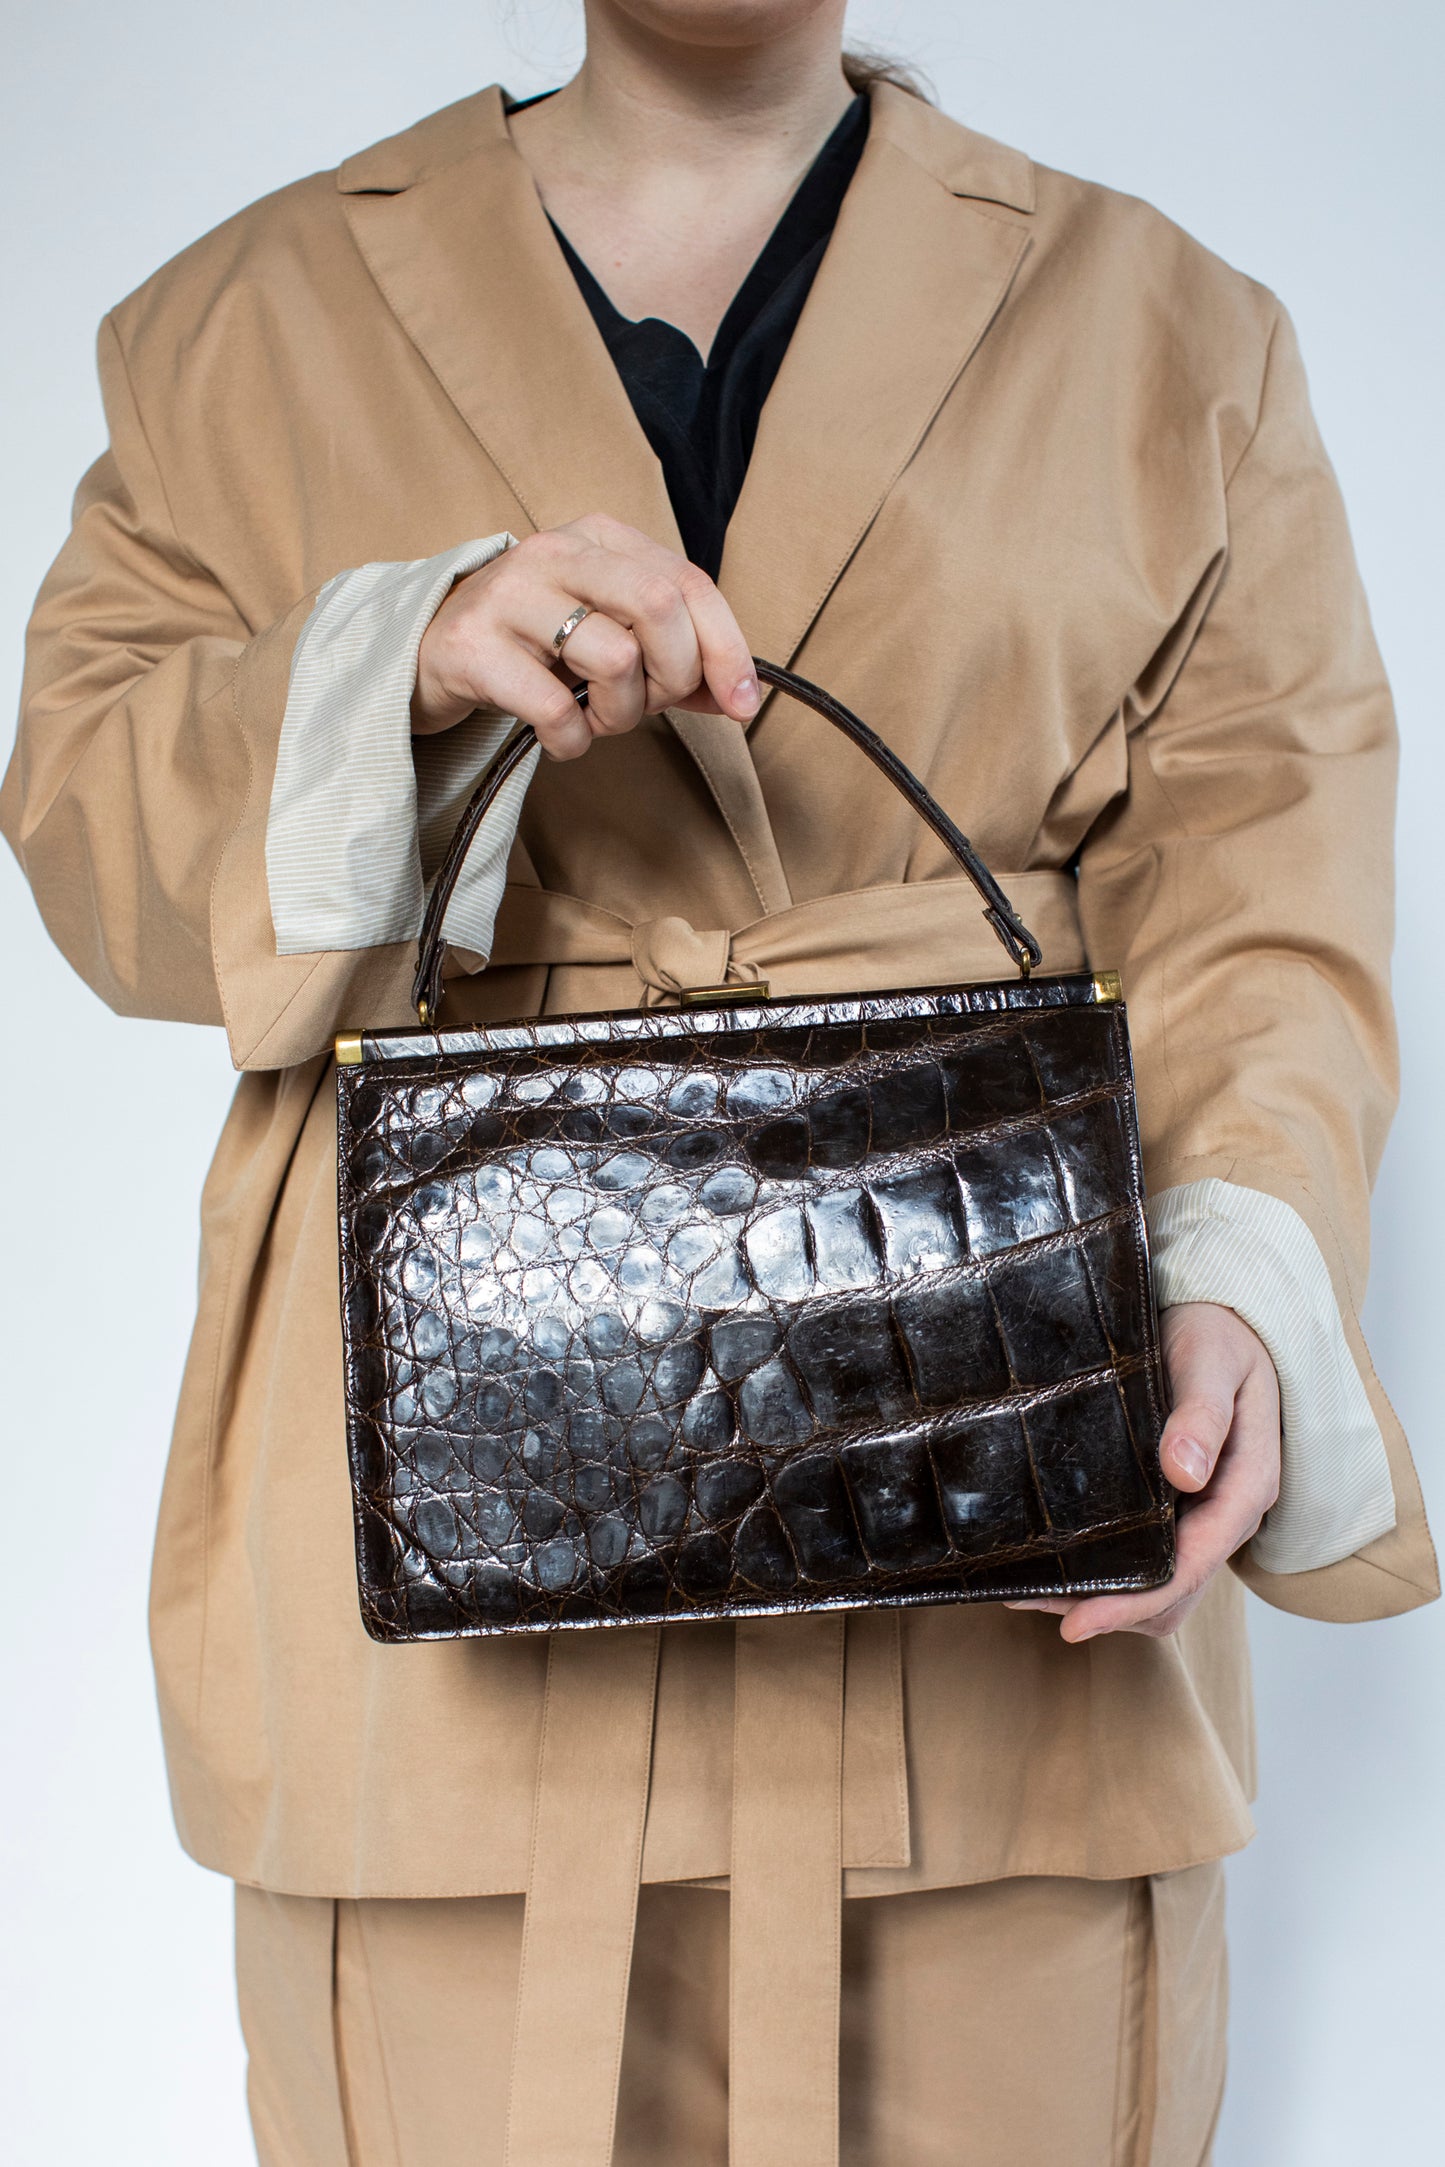 1960 Vintage Brown Crocodile Leather Handbag with a Wallet